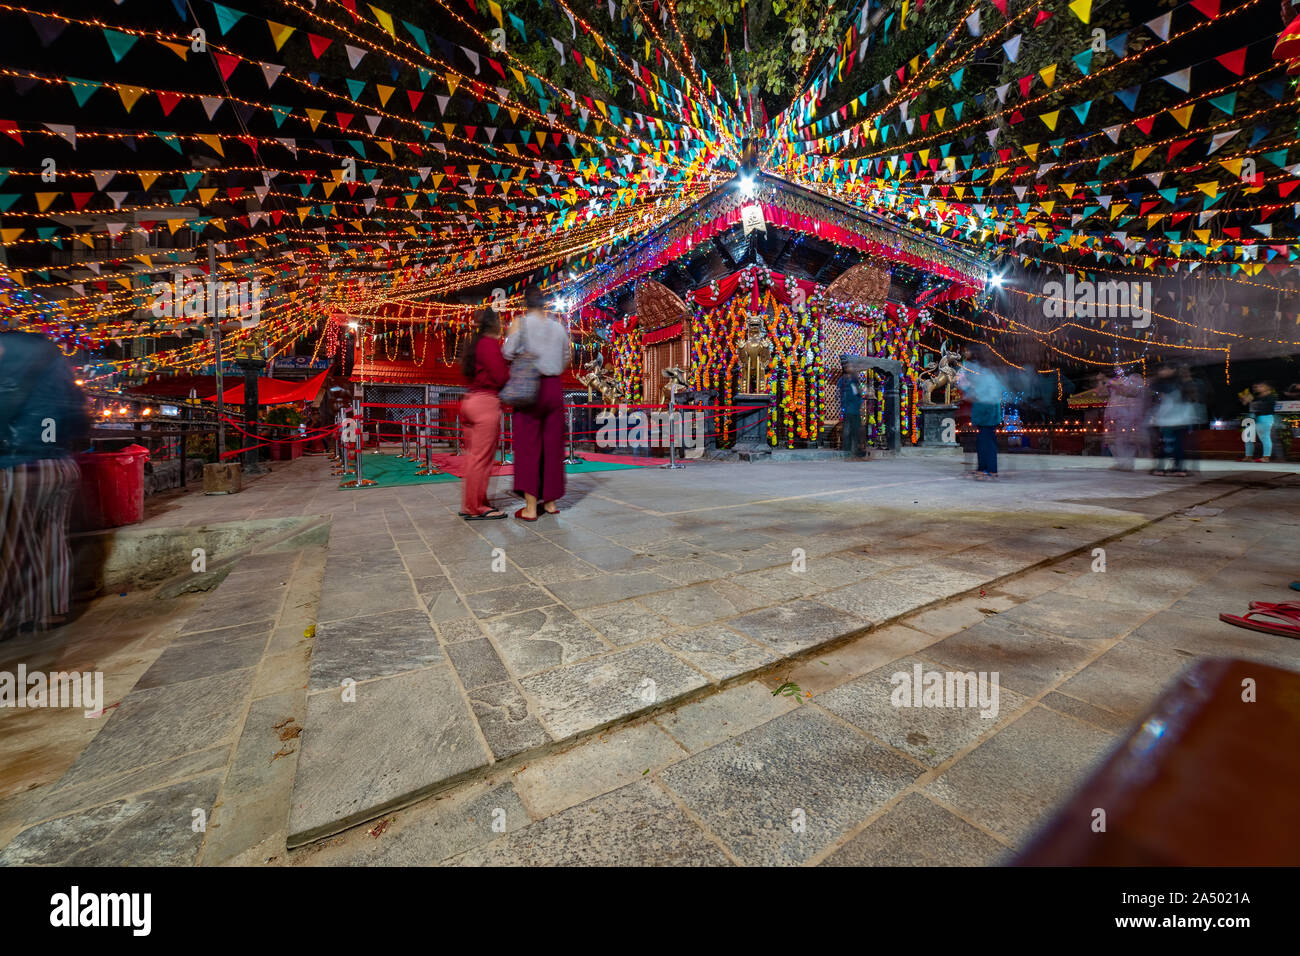 Kathmandu, Nepal - 2. Oktober 2019: Hindu Tempel mit Beleuchtung zur Diwali-fest eingerichtet Stockfoto